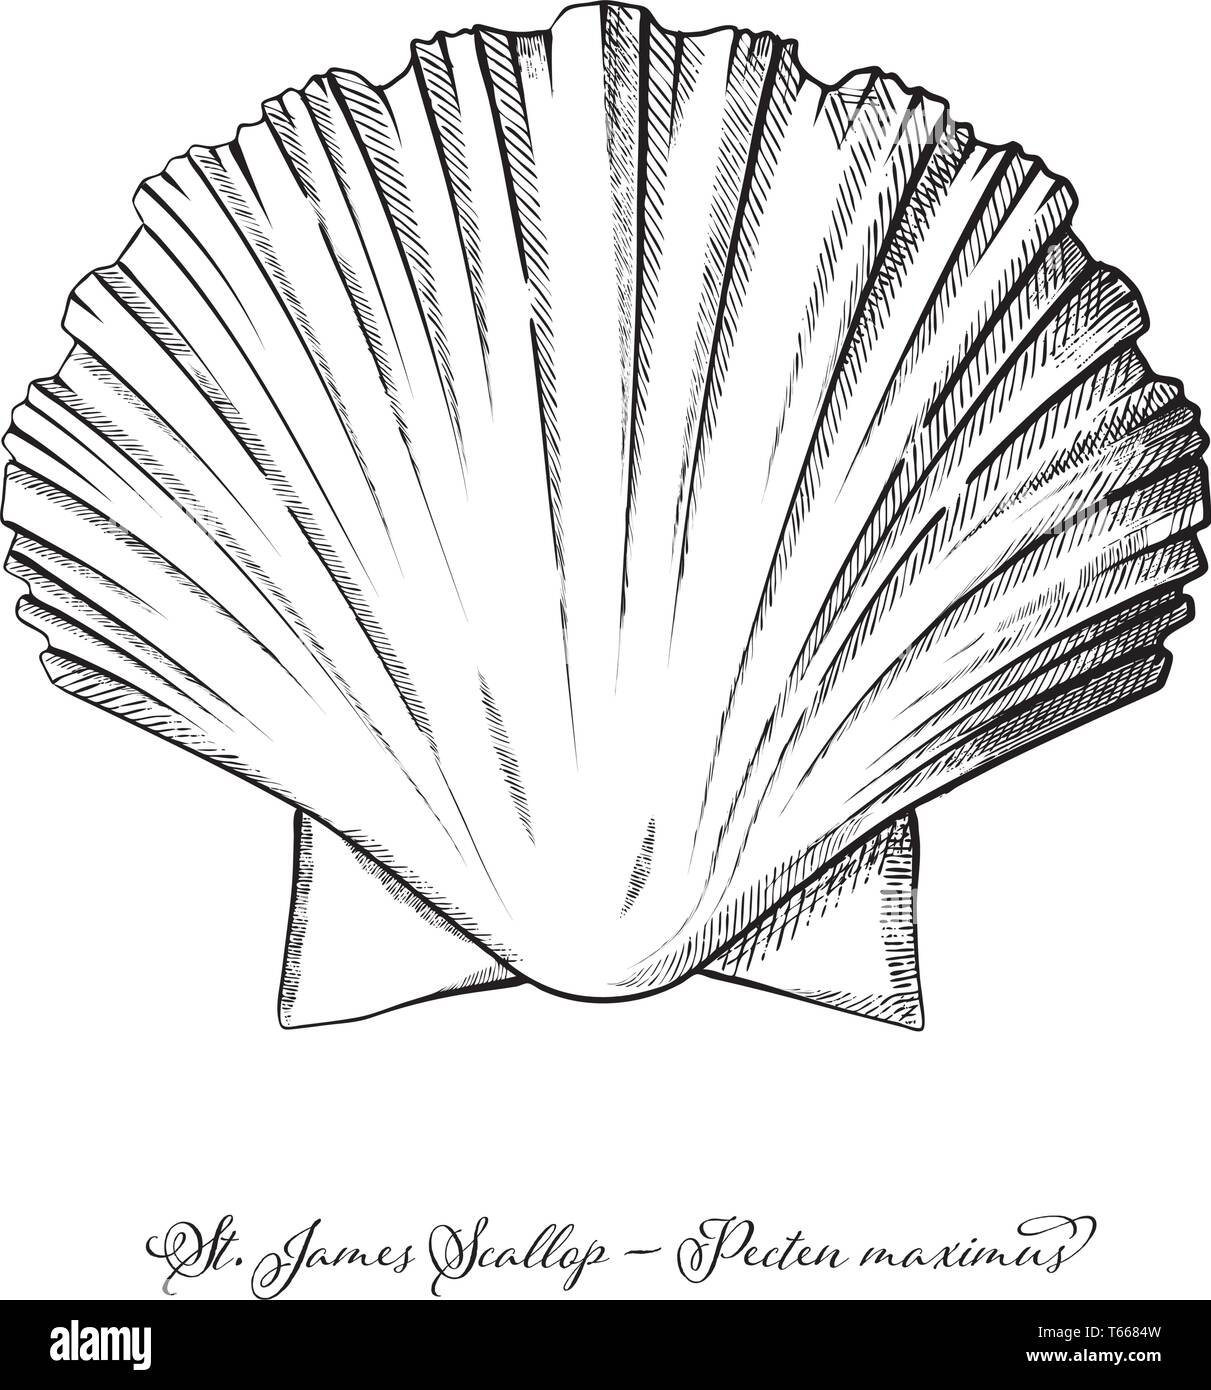 St James smerlo shell vintage stile di incisione illustrazione vettoriale Illustrazione Vettoriale